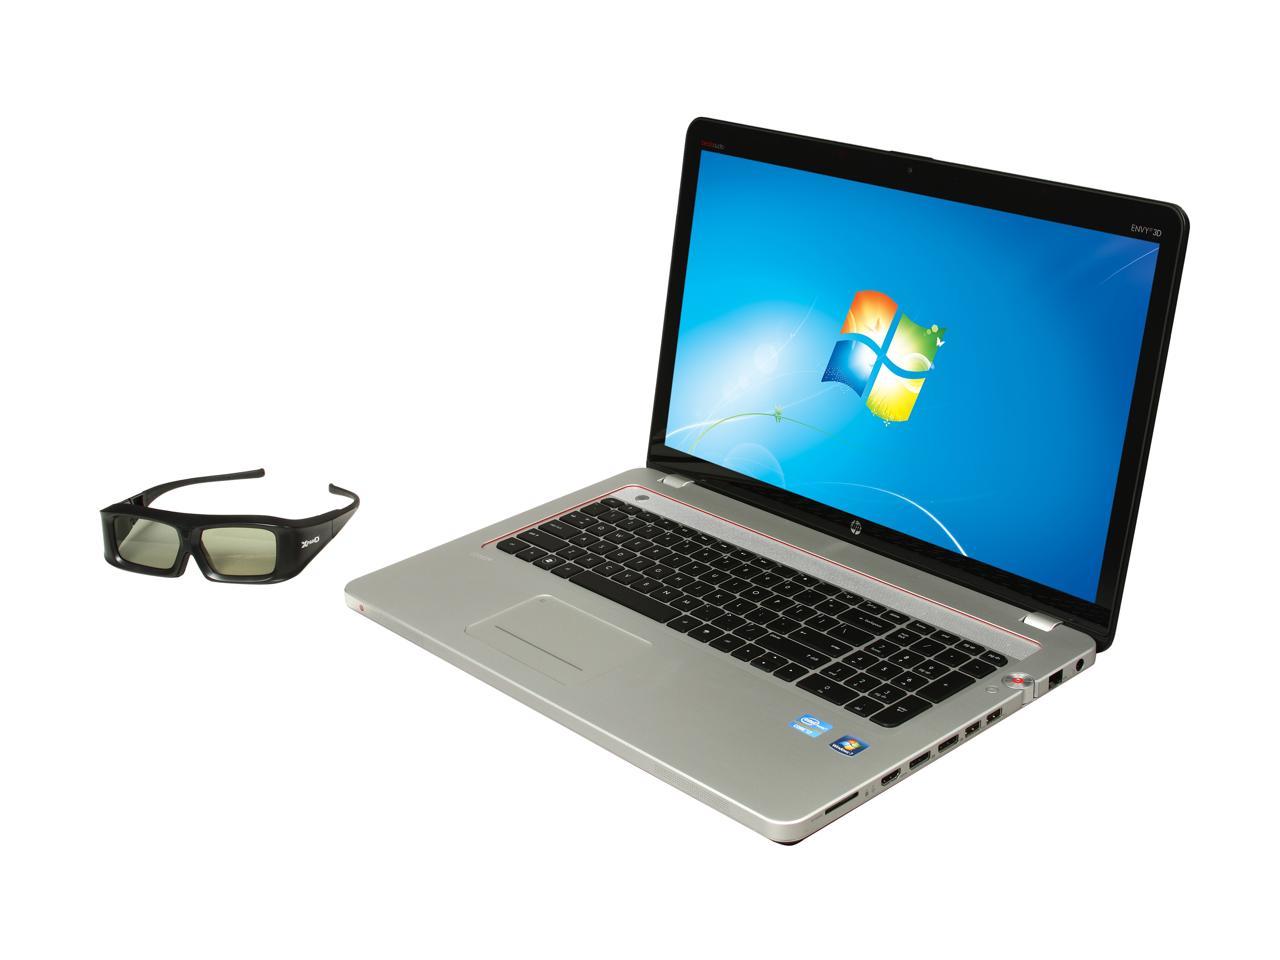 HP Laptop ENVY 17 17-3290NR Intel Core i7 3rd Gen 3610QM (2.30 GHz) 8